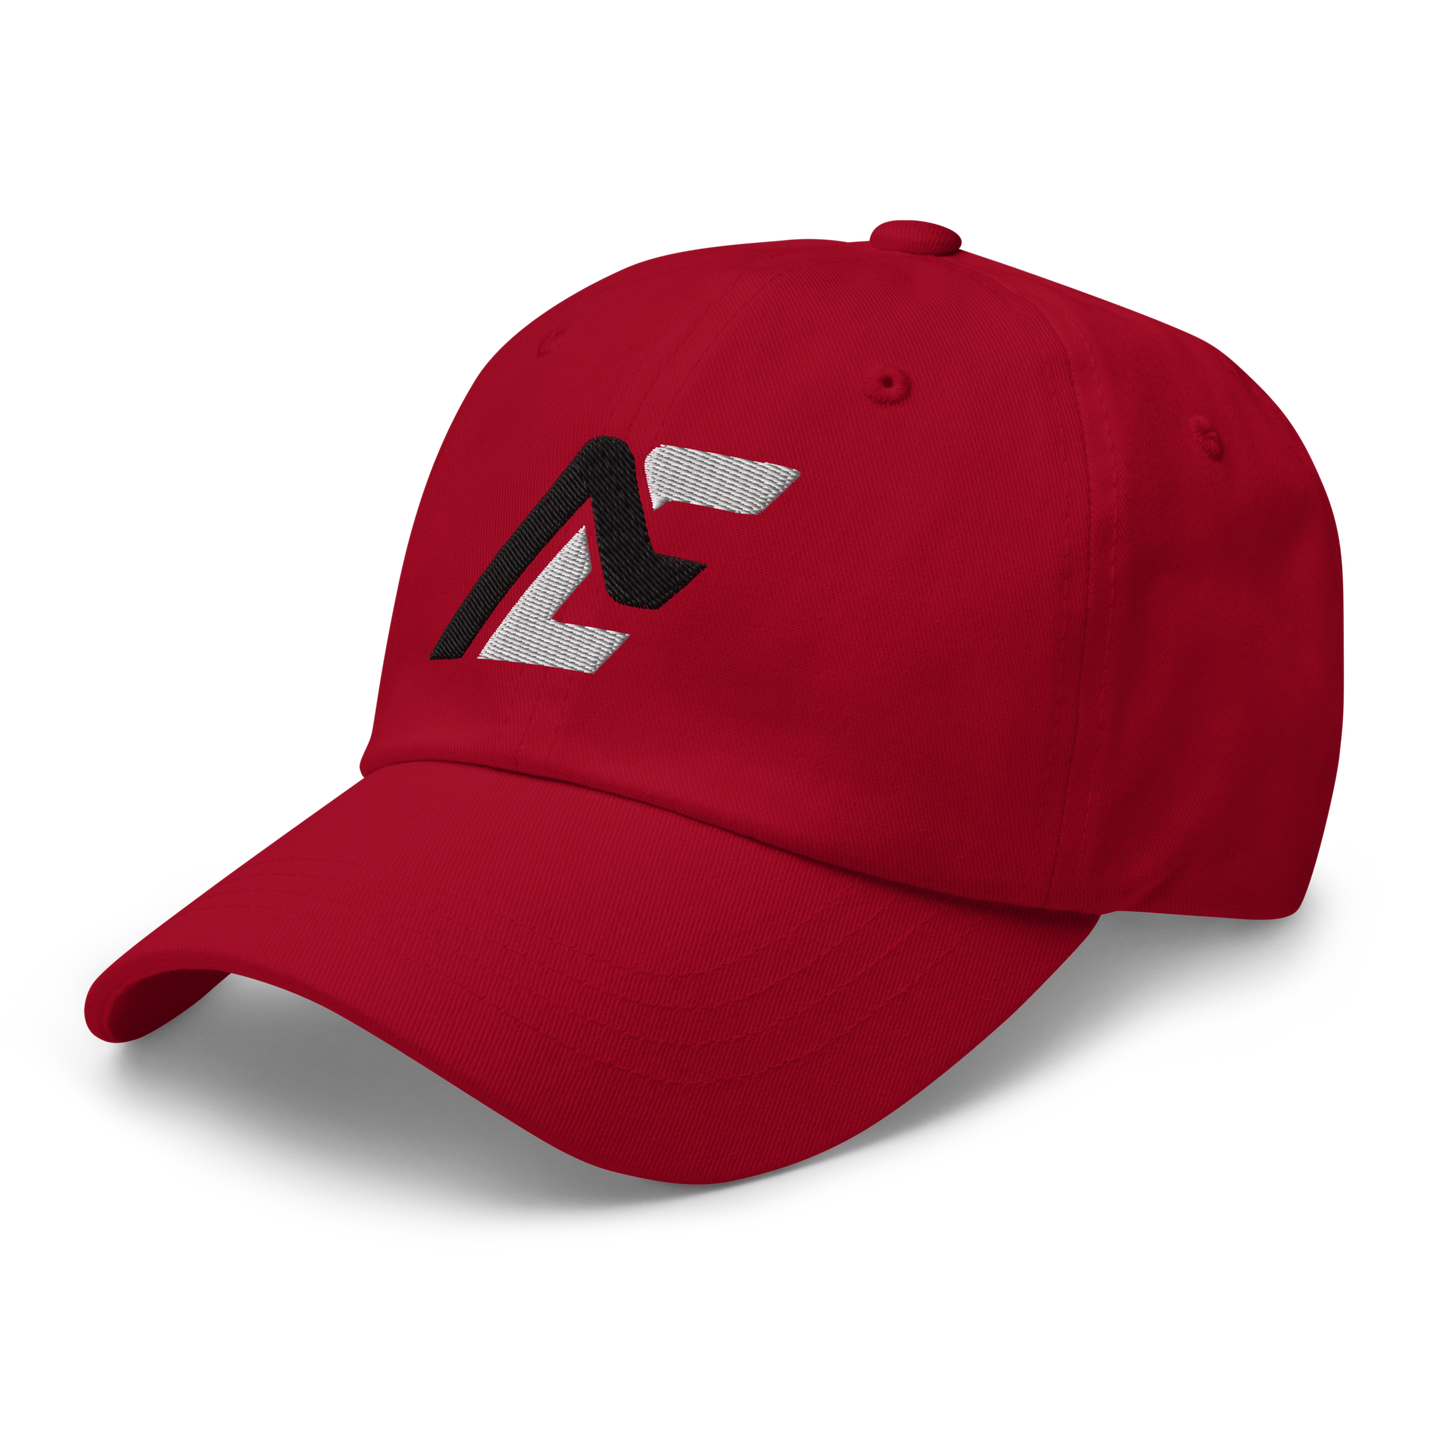 AEIII PERFORMANCE CAP